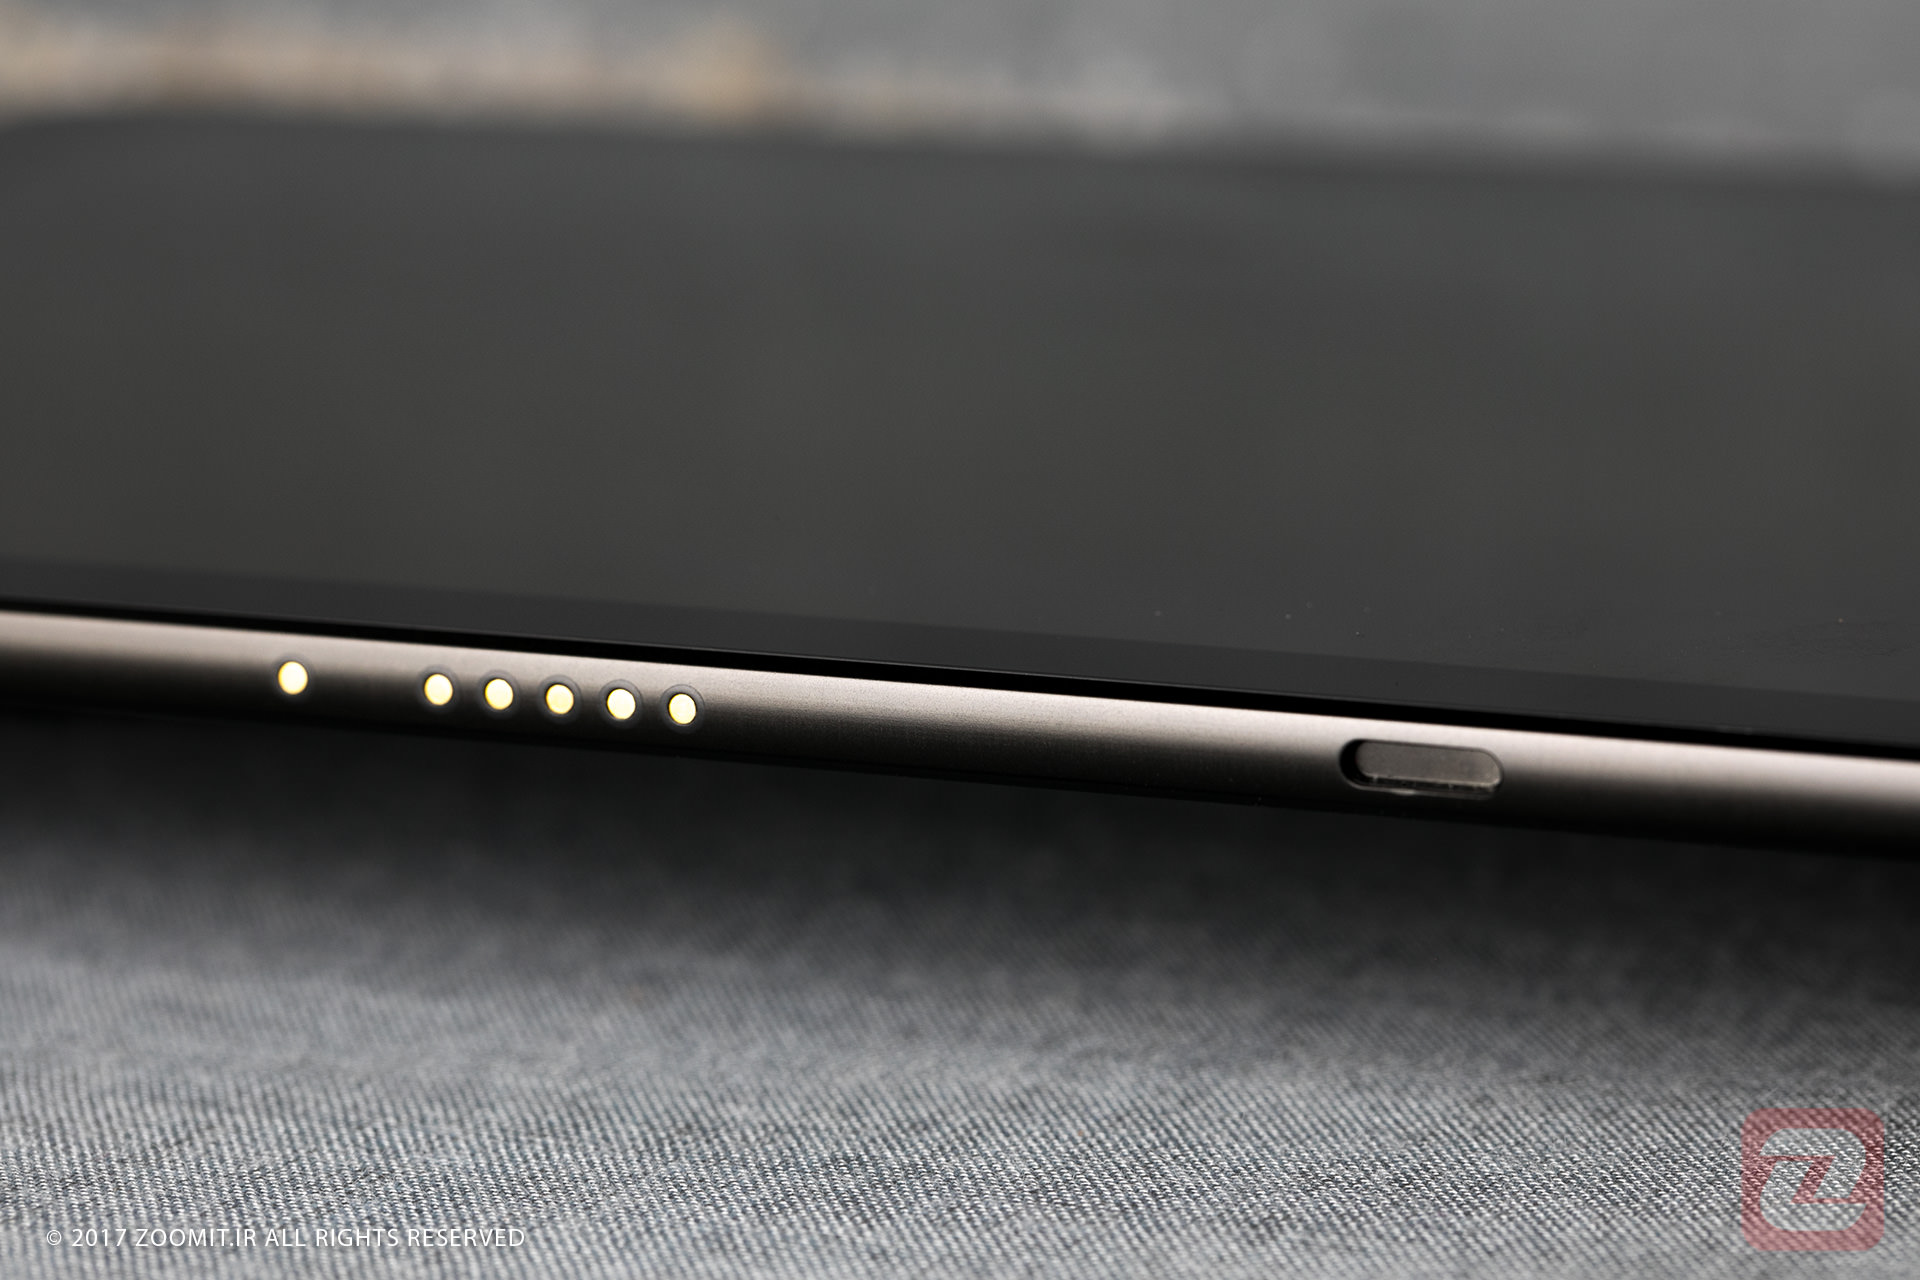 سامسونگ گلکسی تب اس 3 / Samsung Galaxy Tab S3